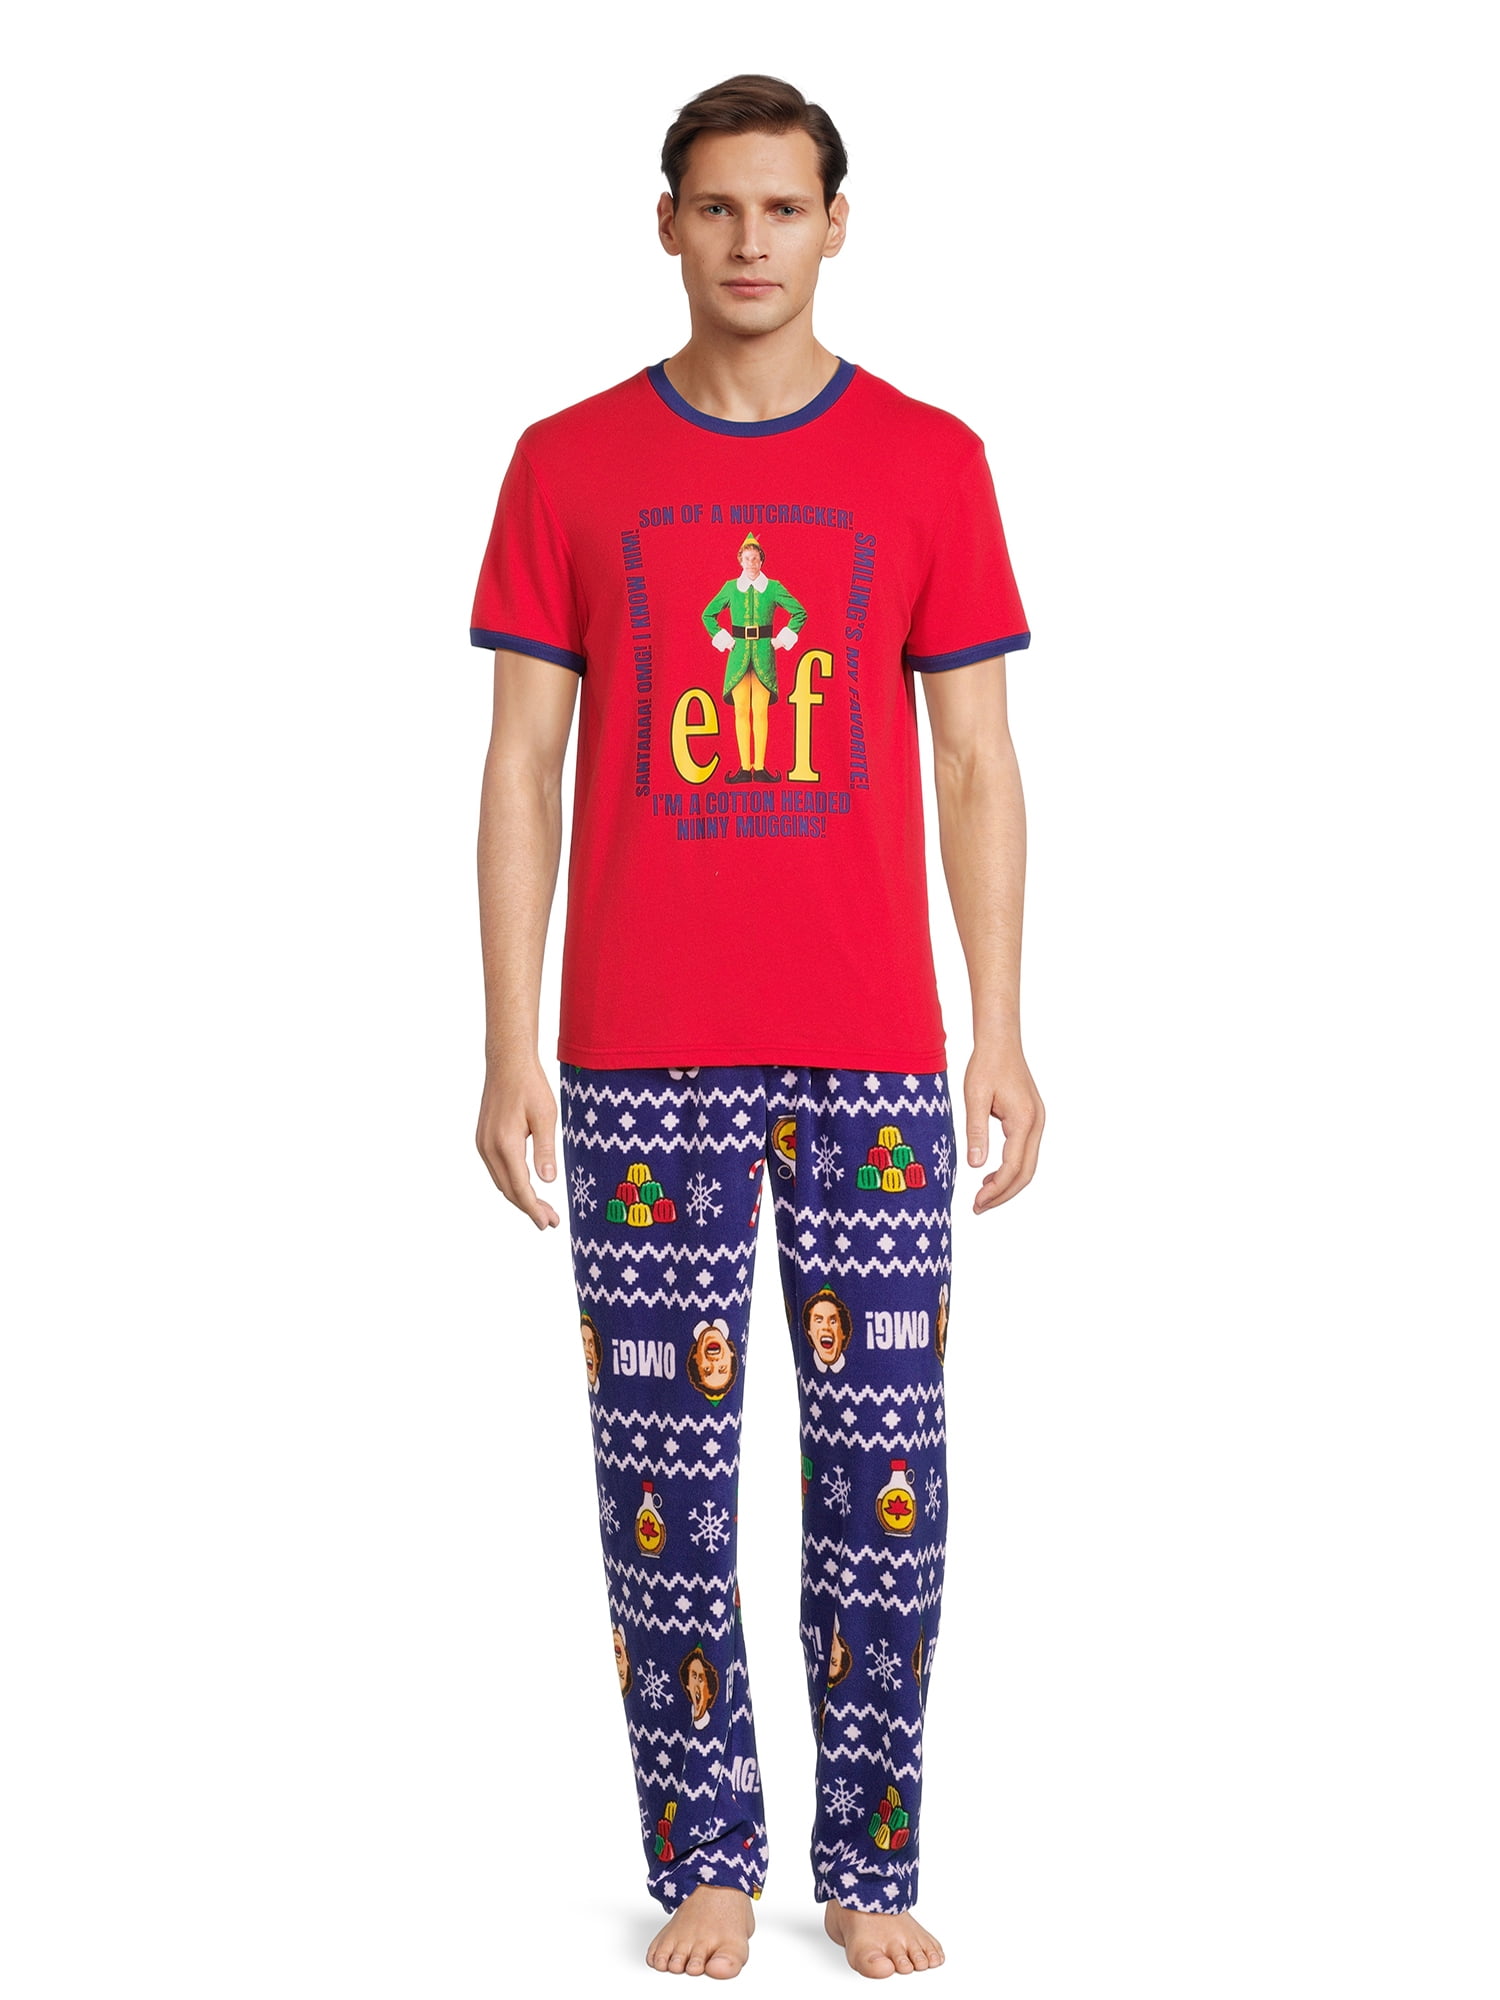 Buddy the Elf Men's Graphic Tee and Pants Sleepwear Set, 2-Piece, Sizes ...